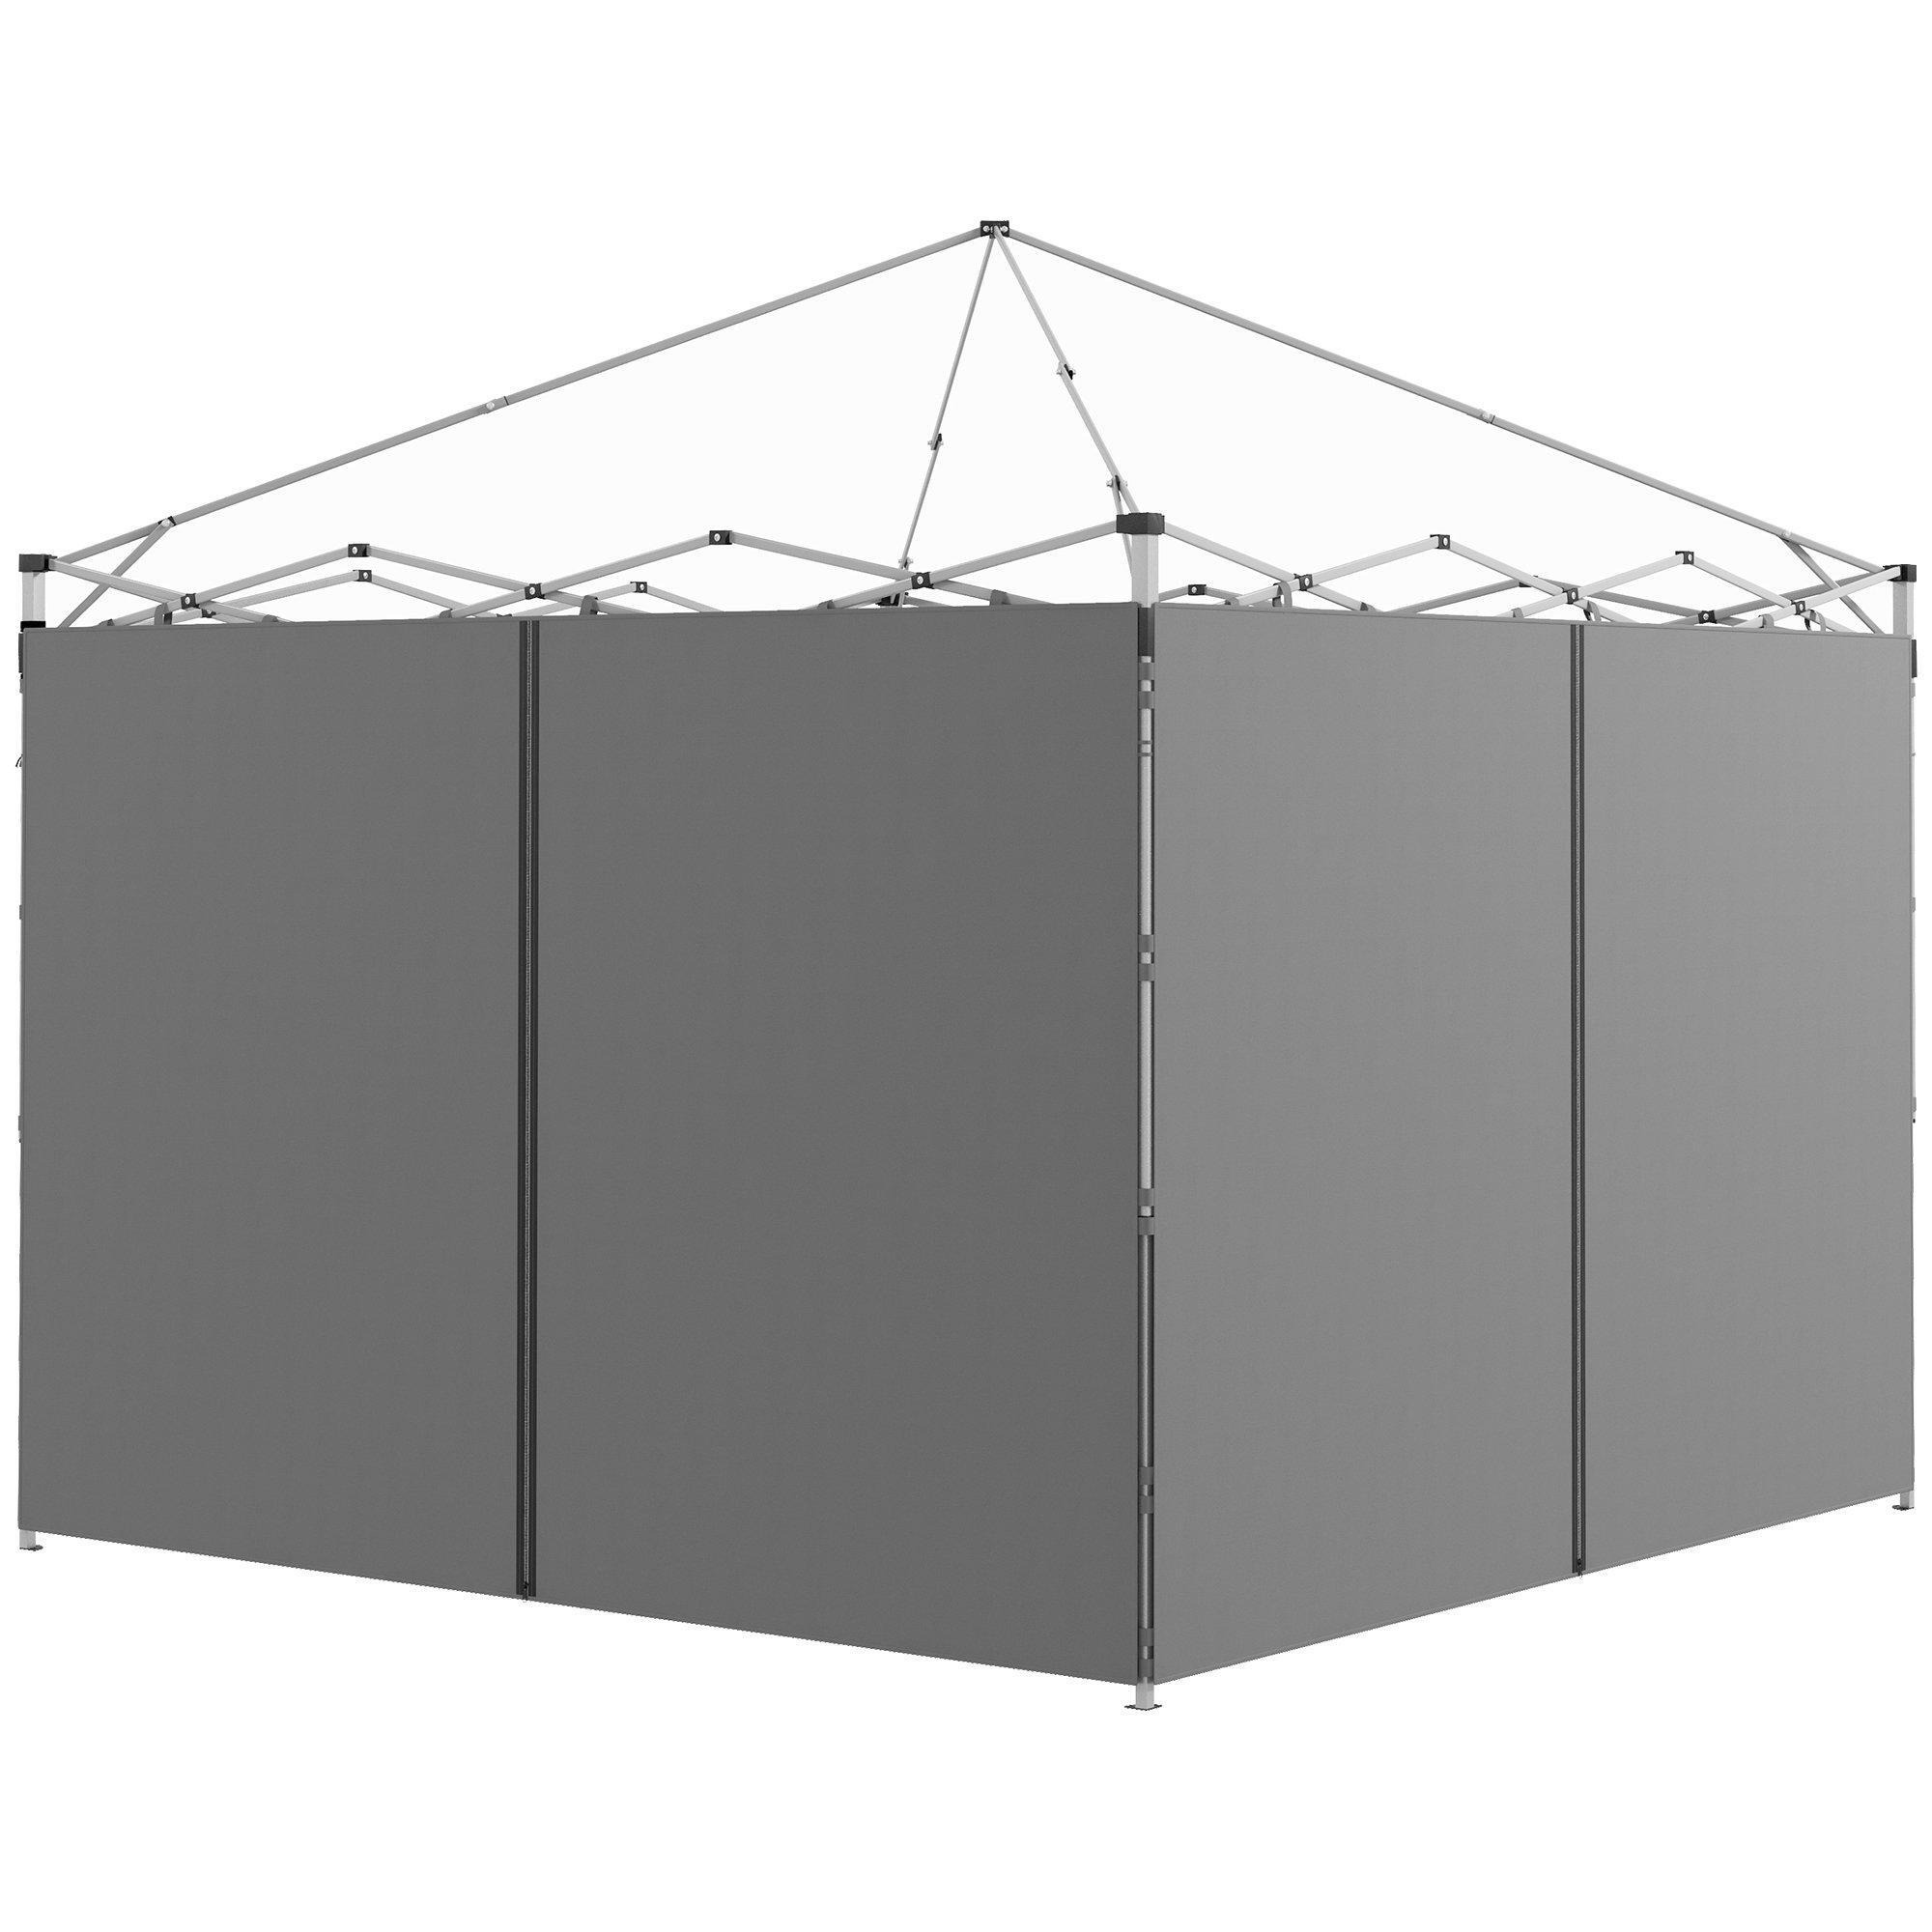 3x3(m) or 3x6m Pop Up Gazebo Side Panels, with Zipped Doors - image 1